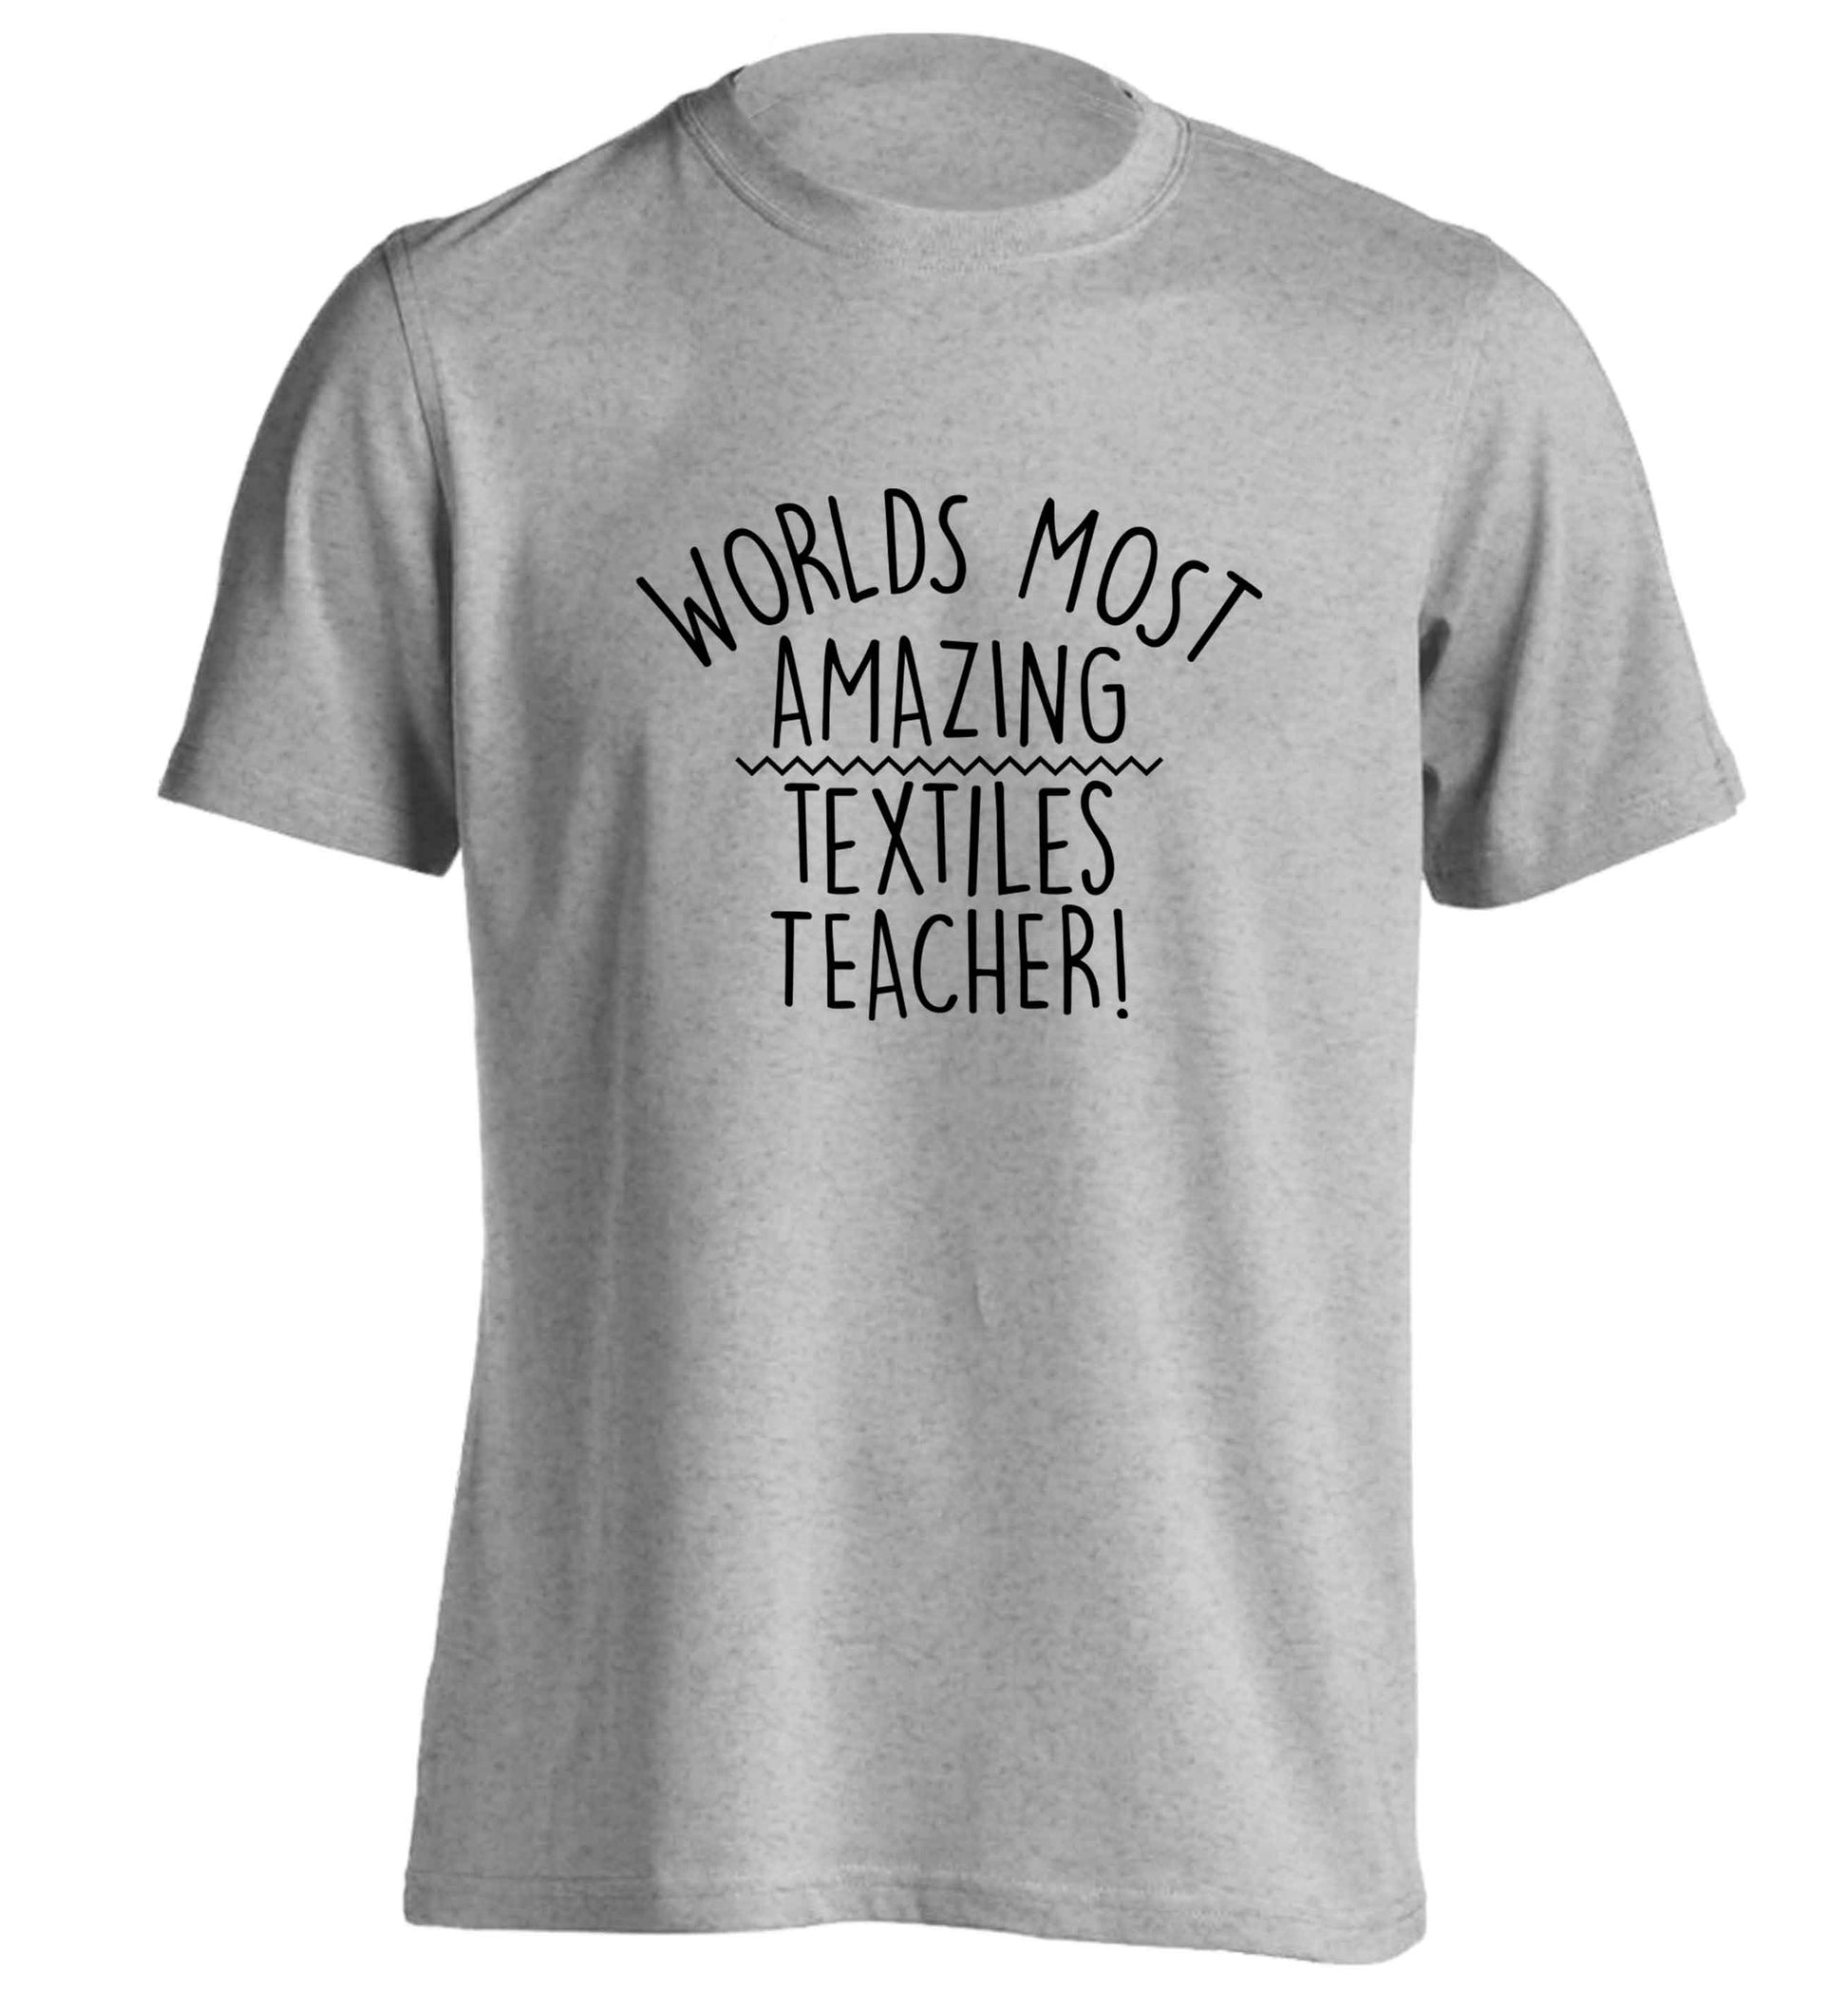 Worlds most amazing textiles teacher adults unisex grey Tshirt 2XL